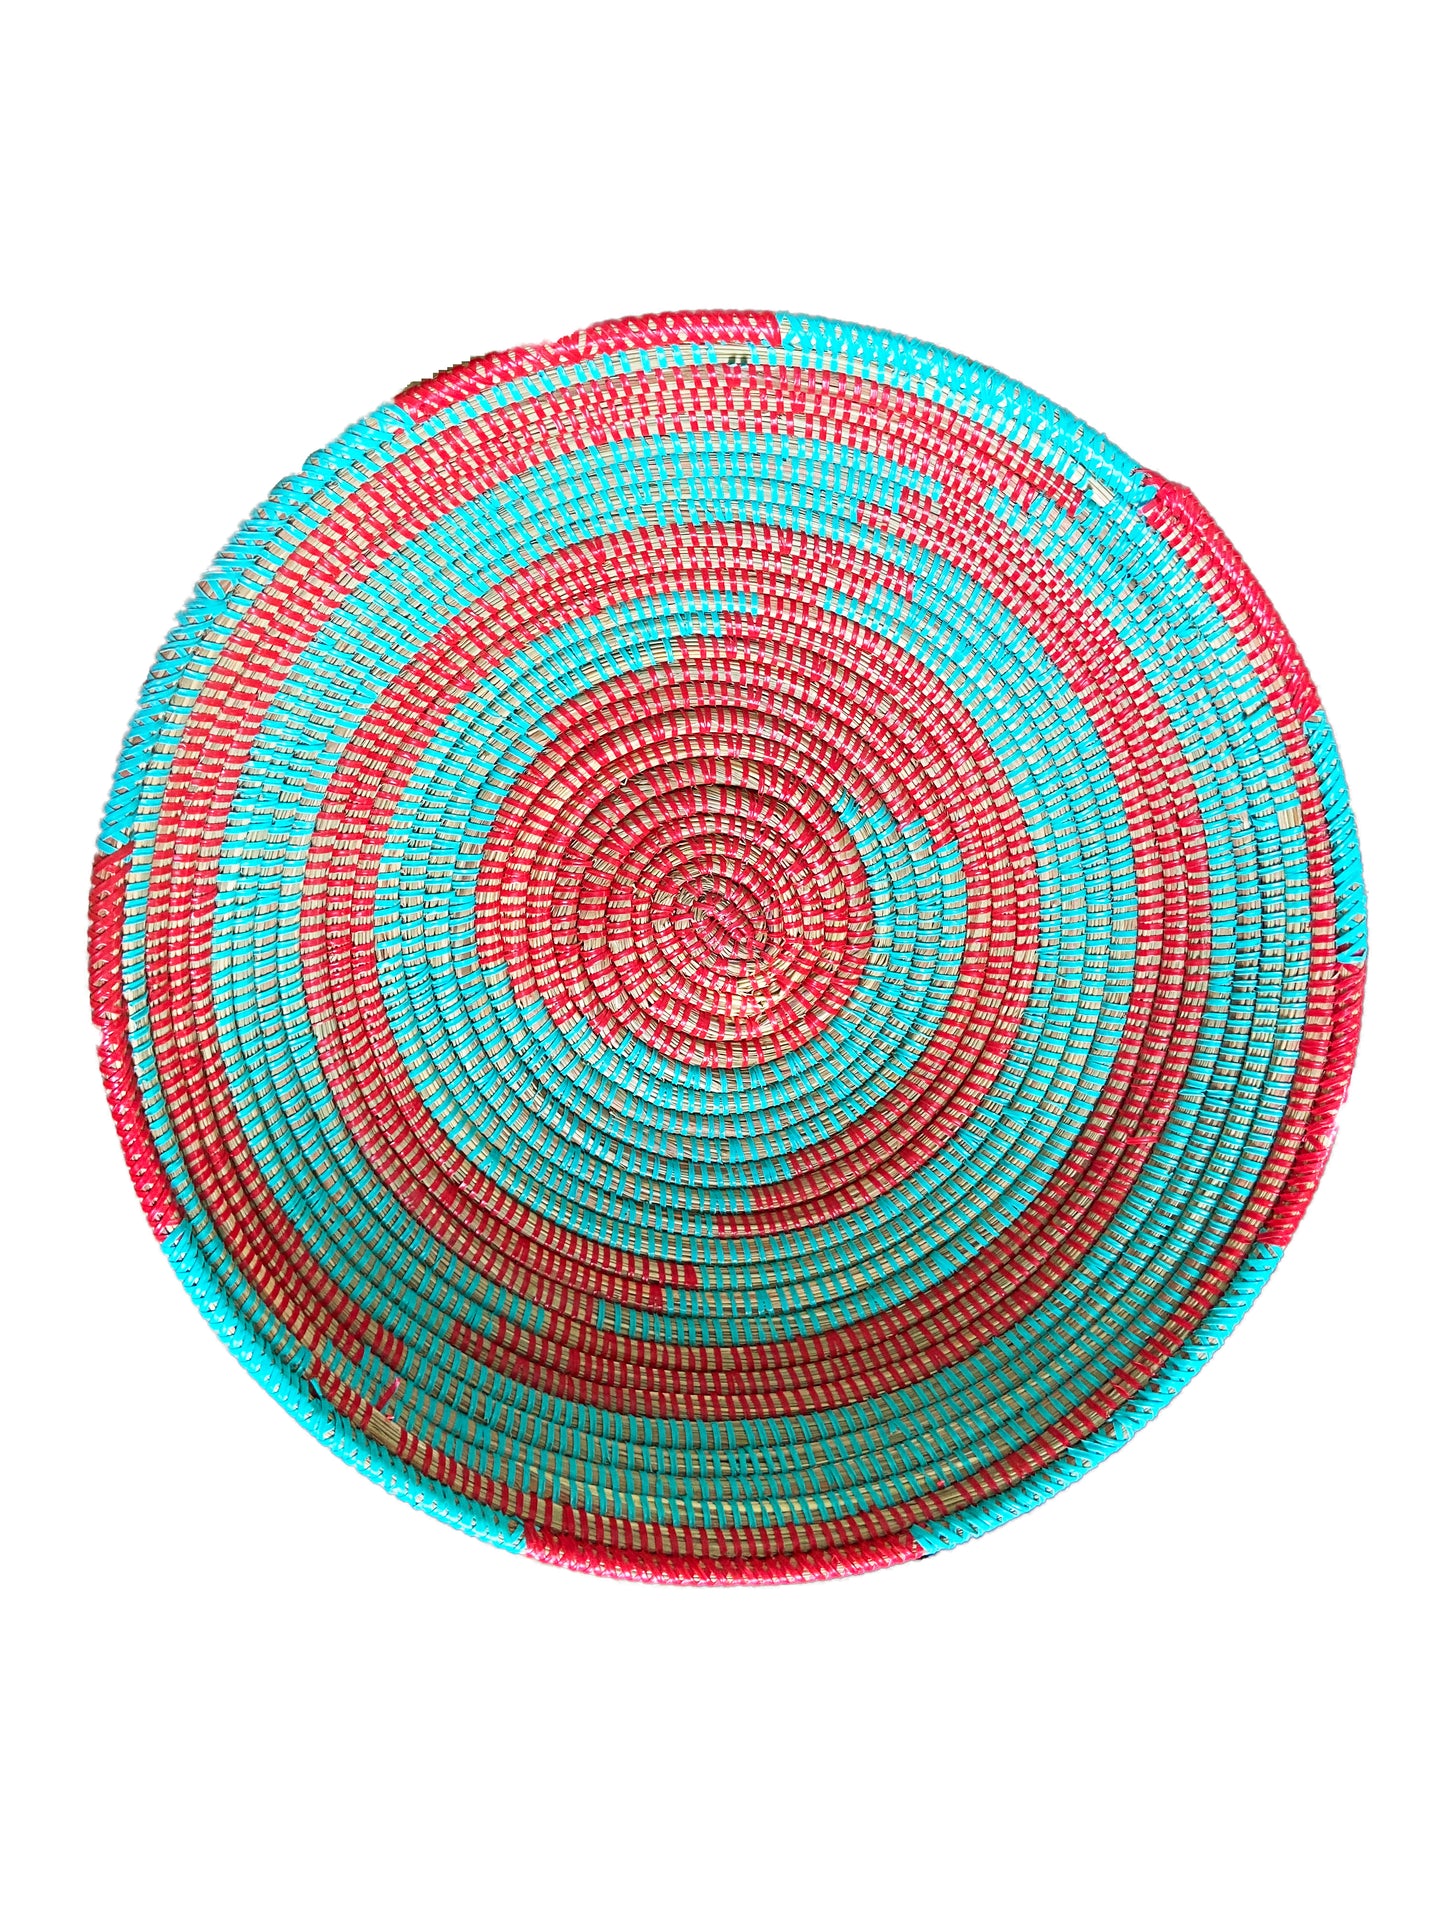 #3546 Lg Handmade Woven Wolof Basket From Senegal 18" in D